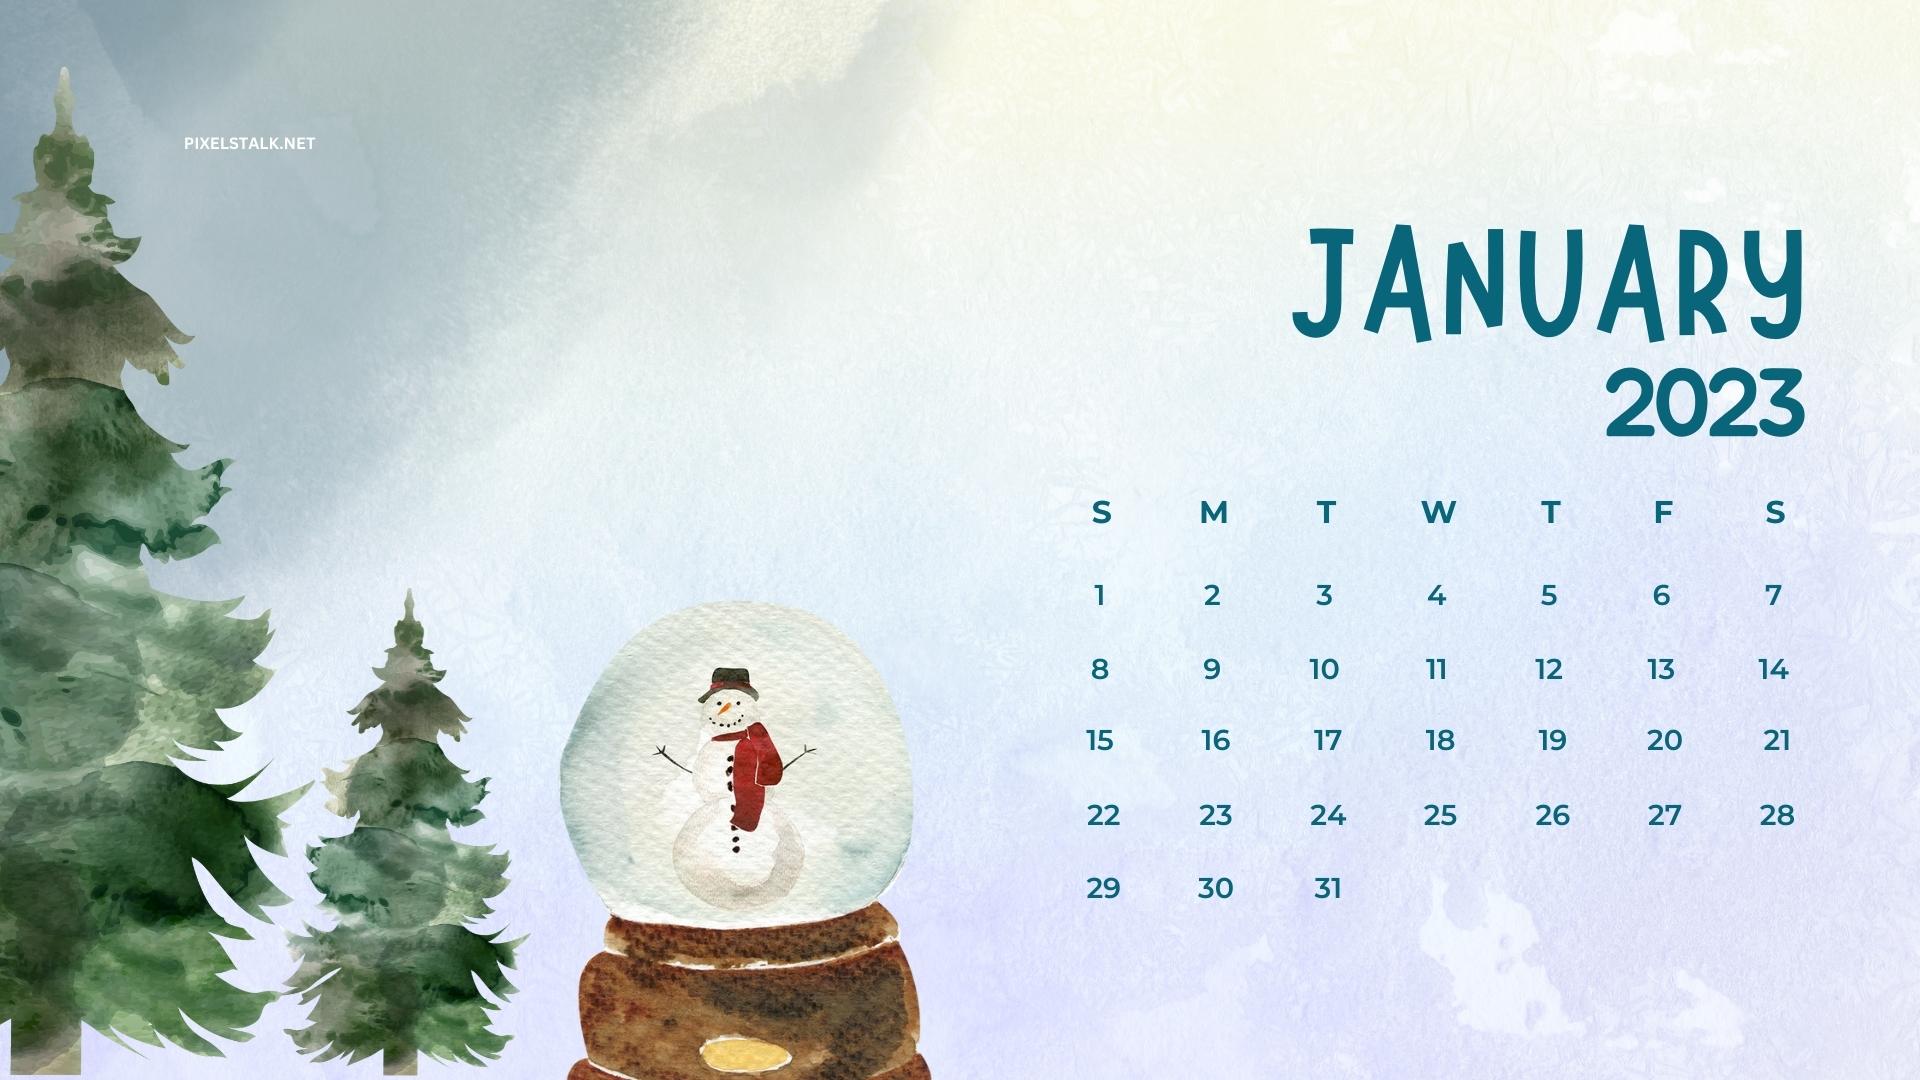 January 2023 Calendar Wallpaper  Wallpapers from TheHolidaySpot